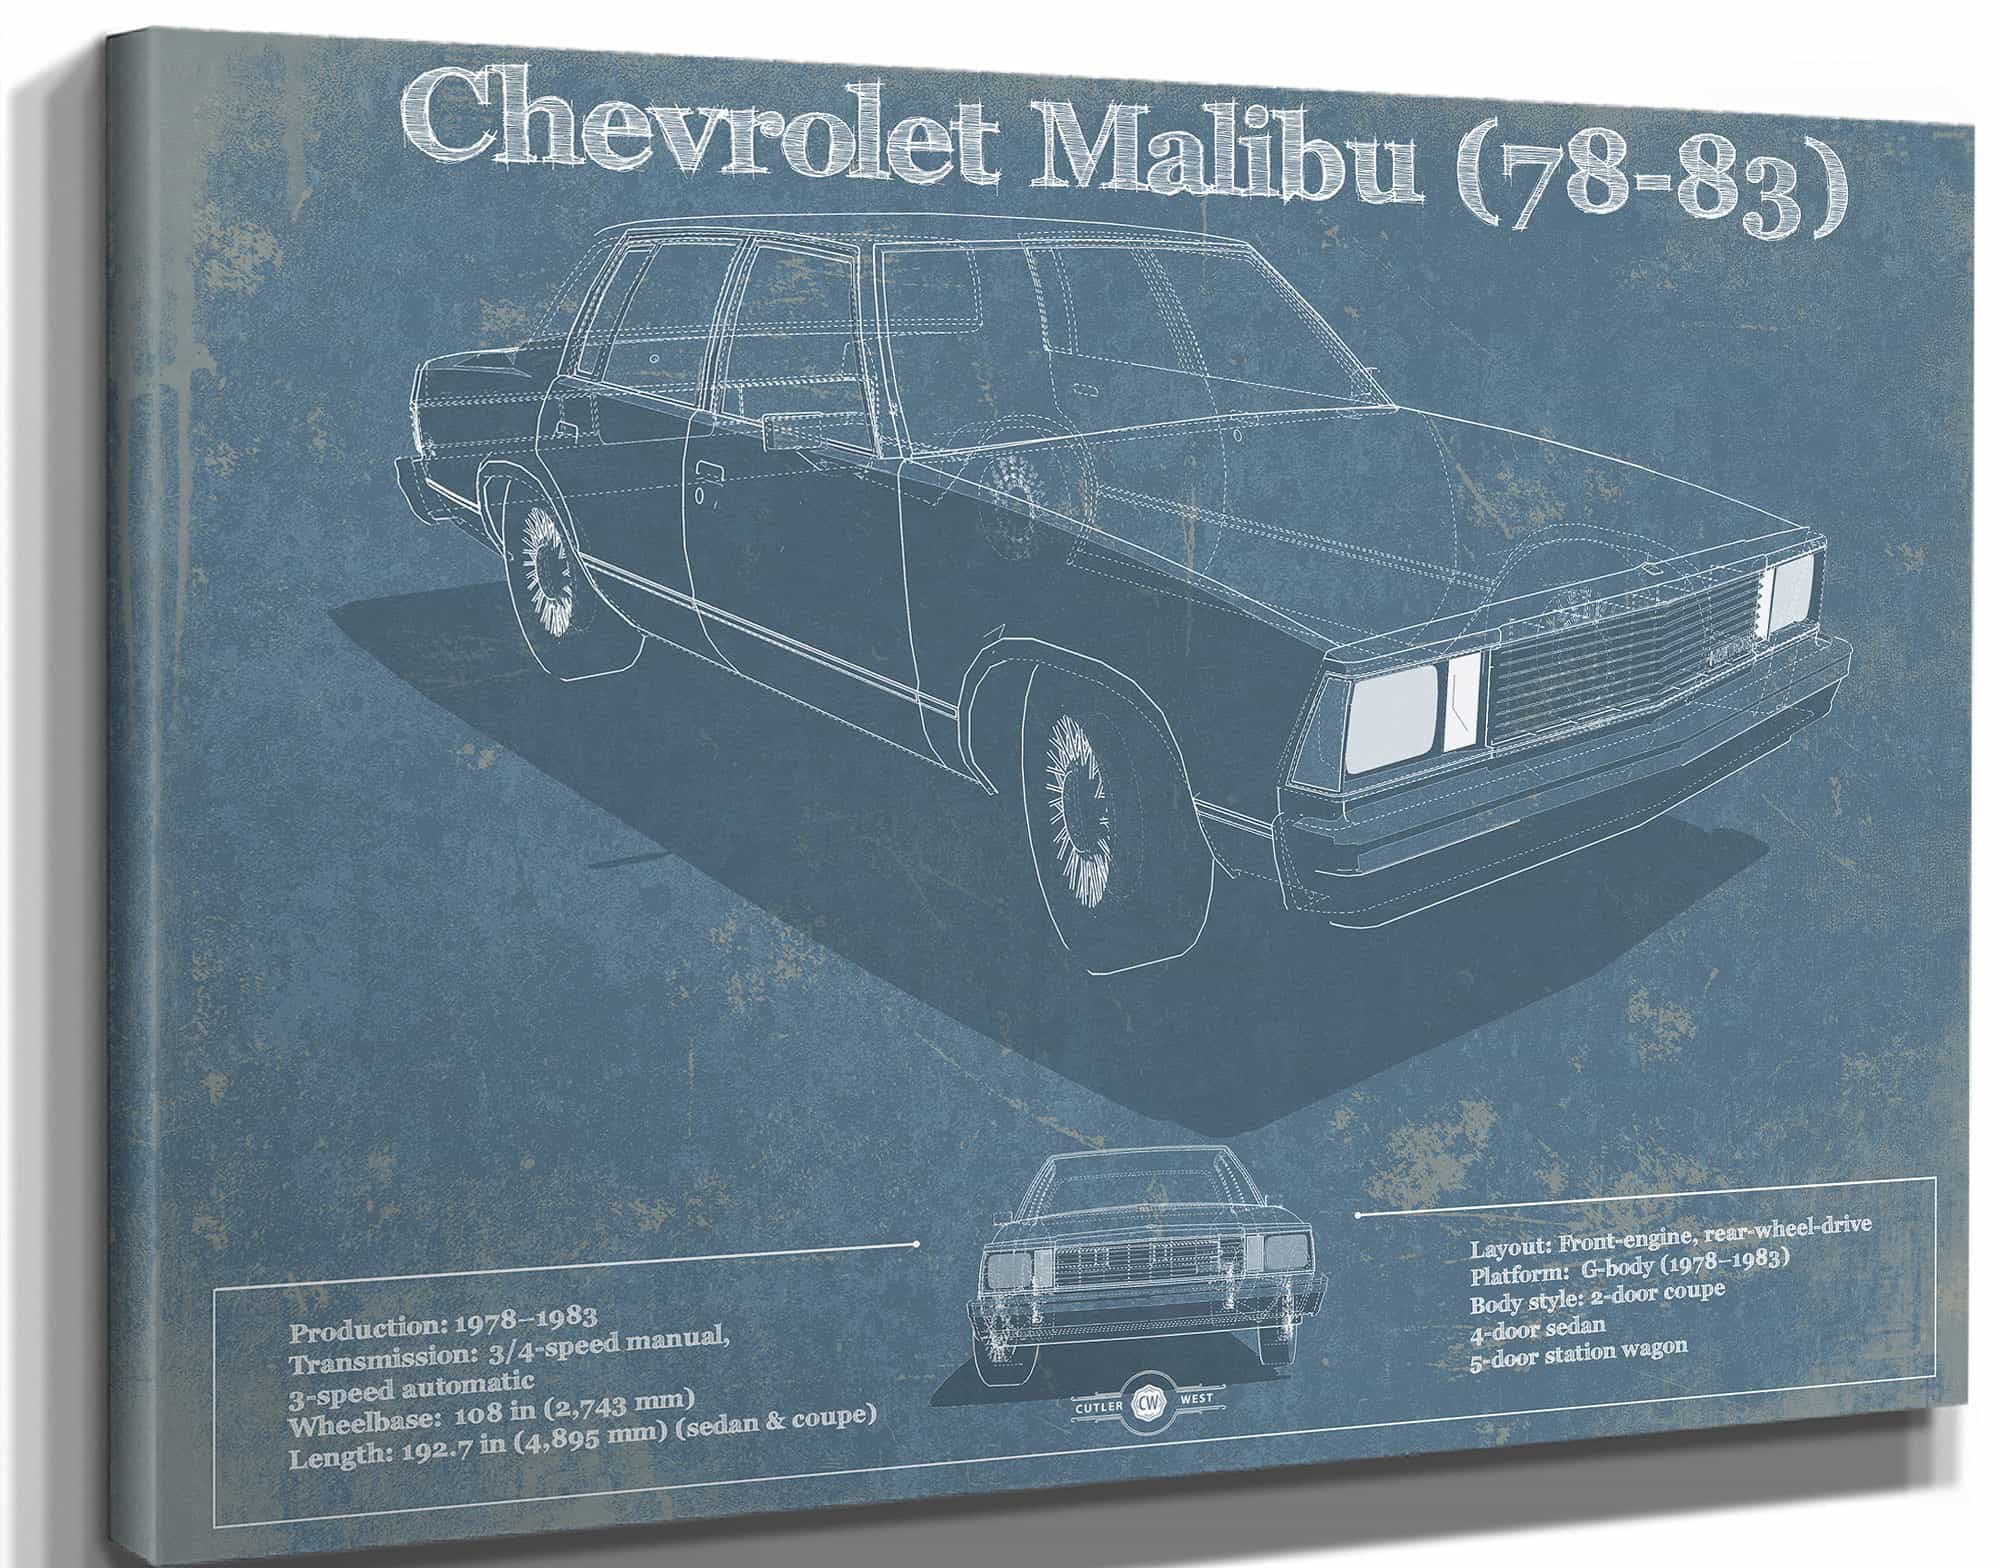 Chevrolet Malibu 78-83 Blueprint Vintage Auto Patent Print